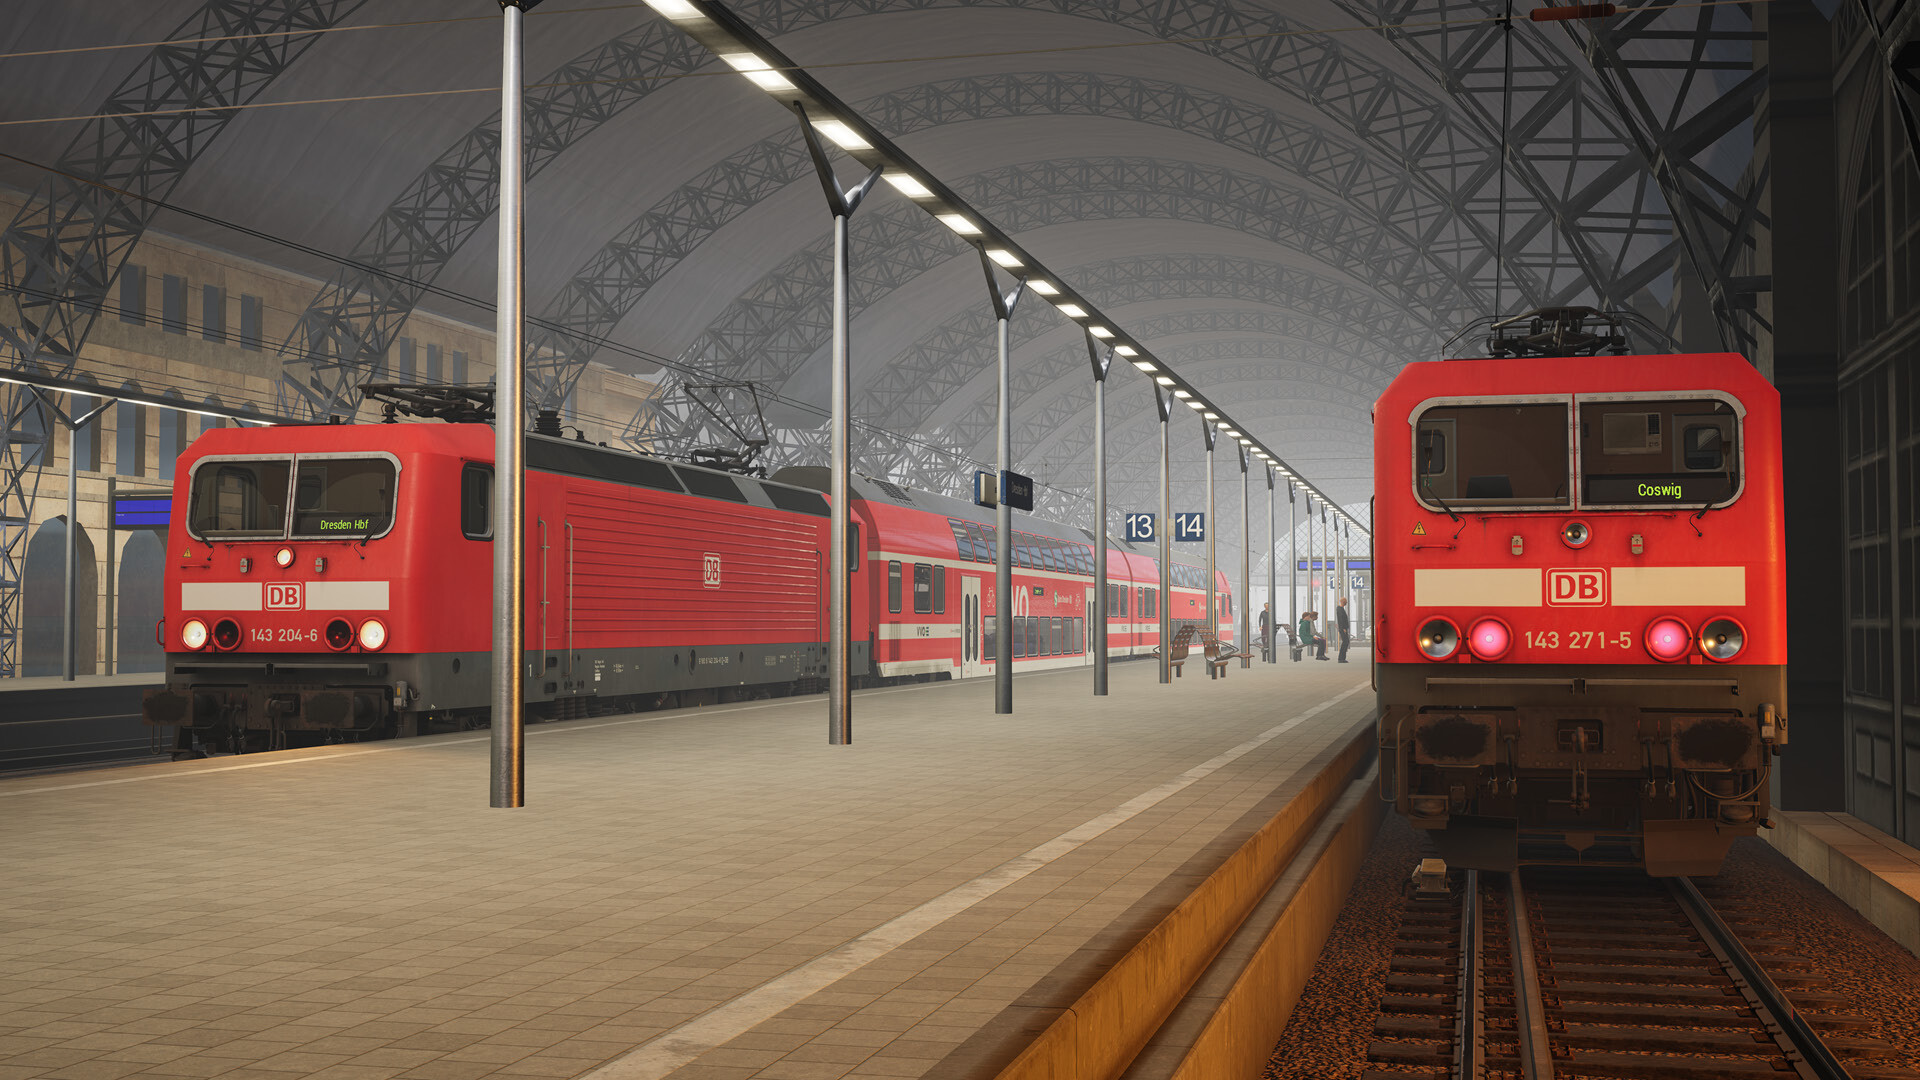 Train Sim World - Nahverkehr Dresden - Riesa Route Add-On DLC Steam CD Key